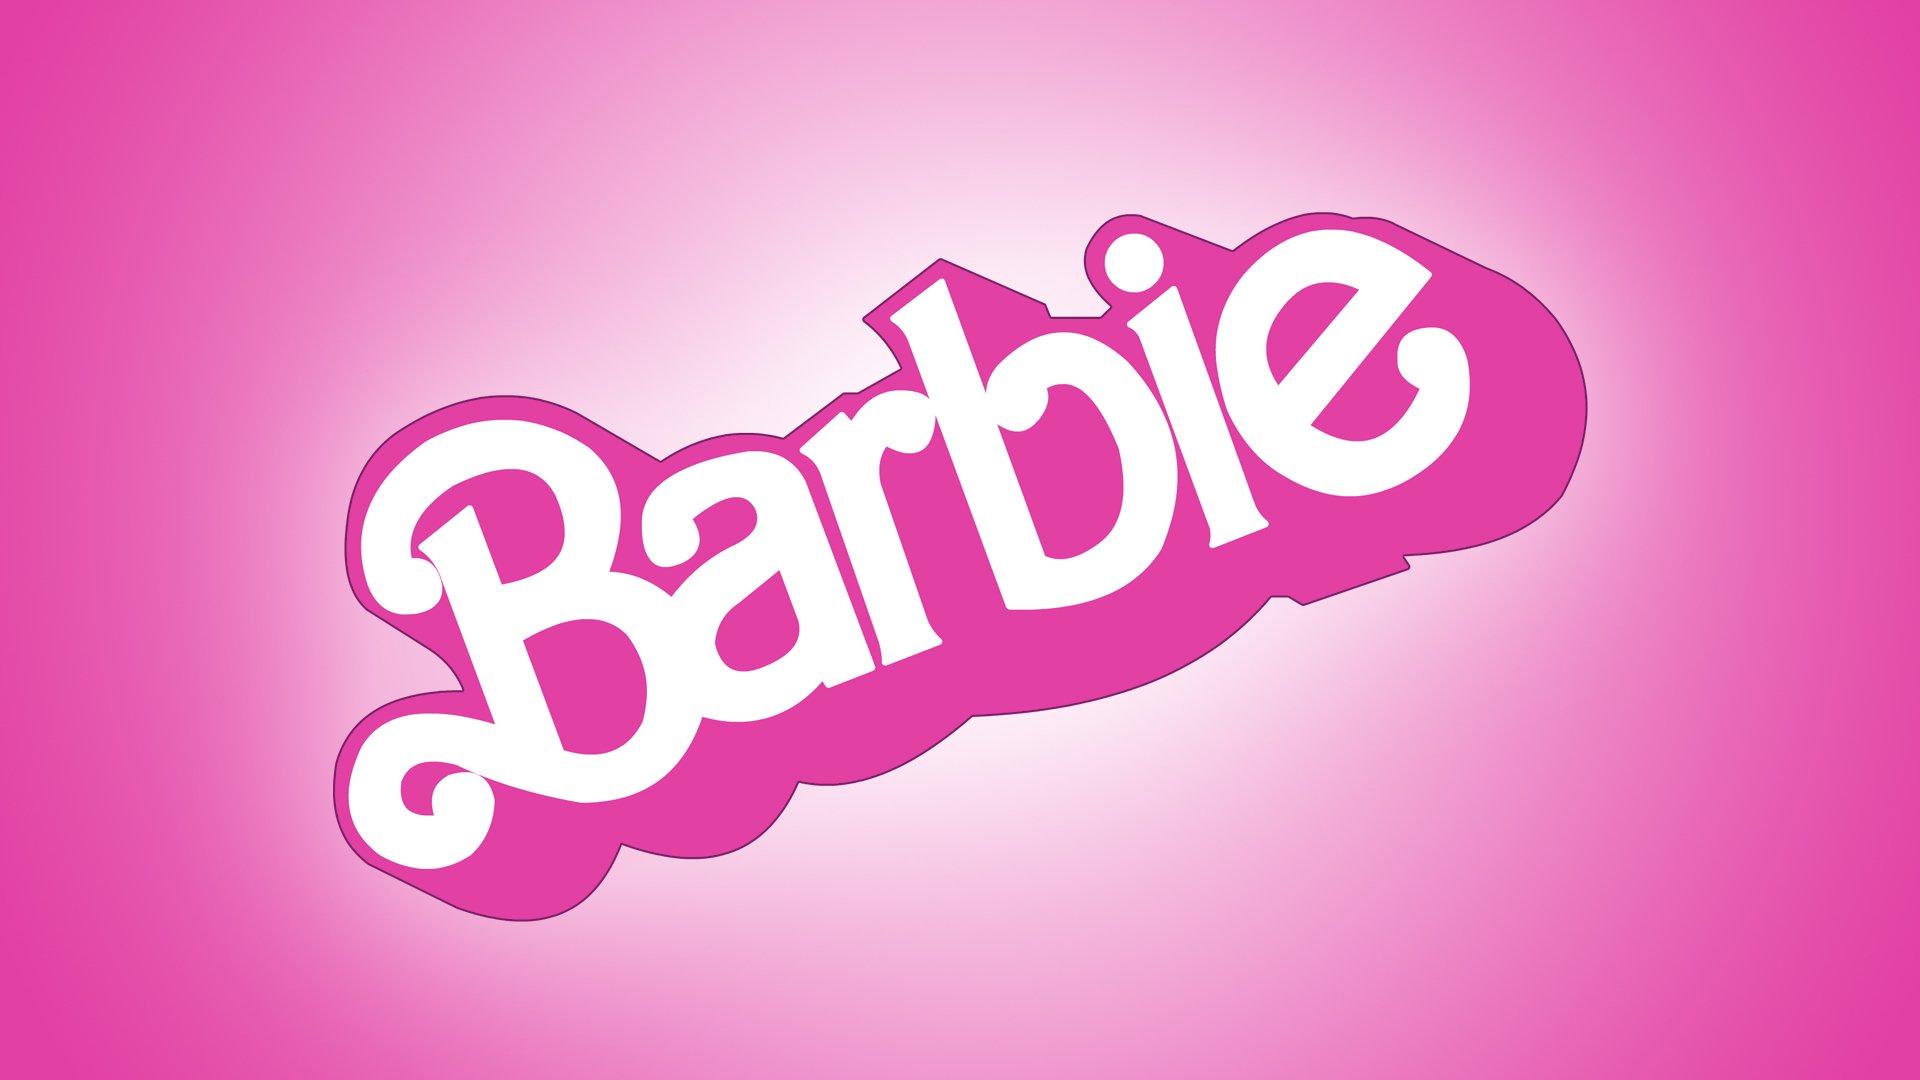 Barbie's Brand Wallpaper HD Wallpaper. Background Image